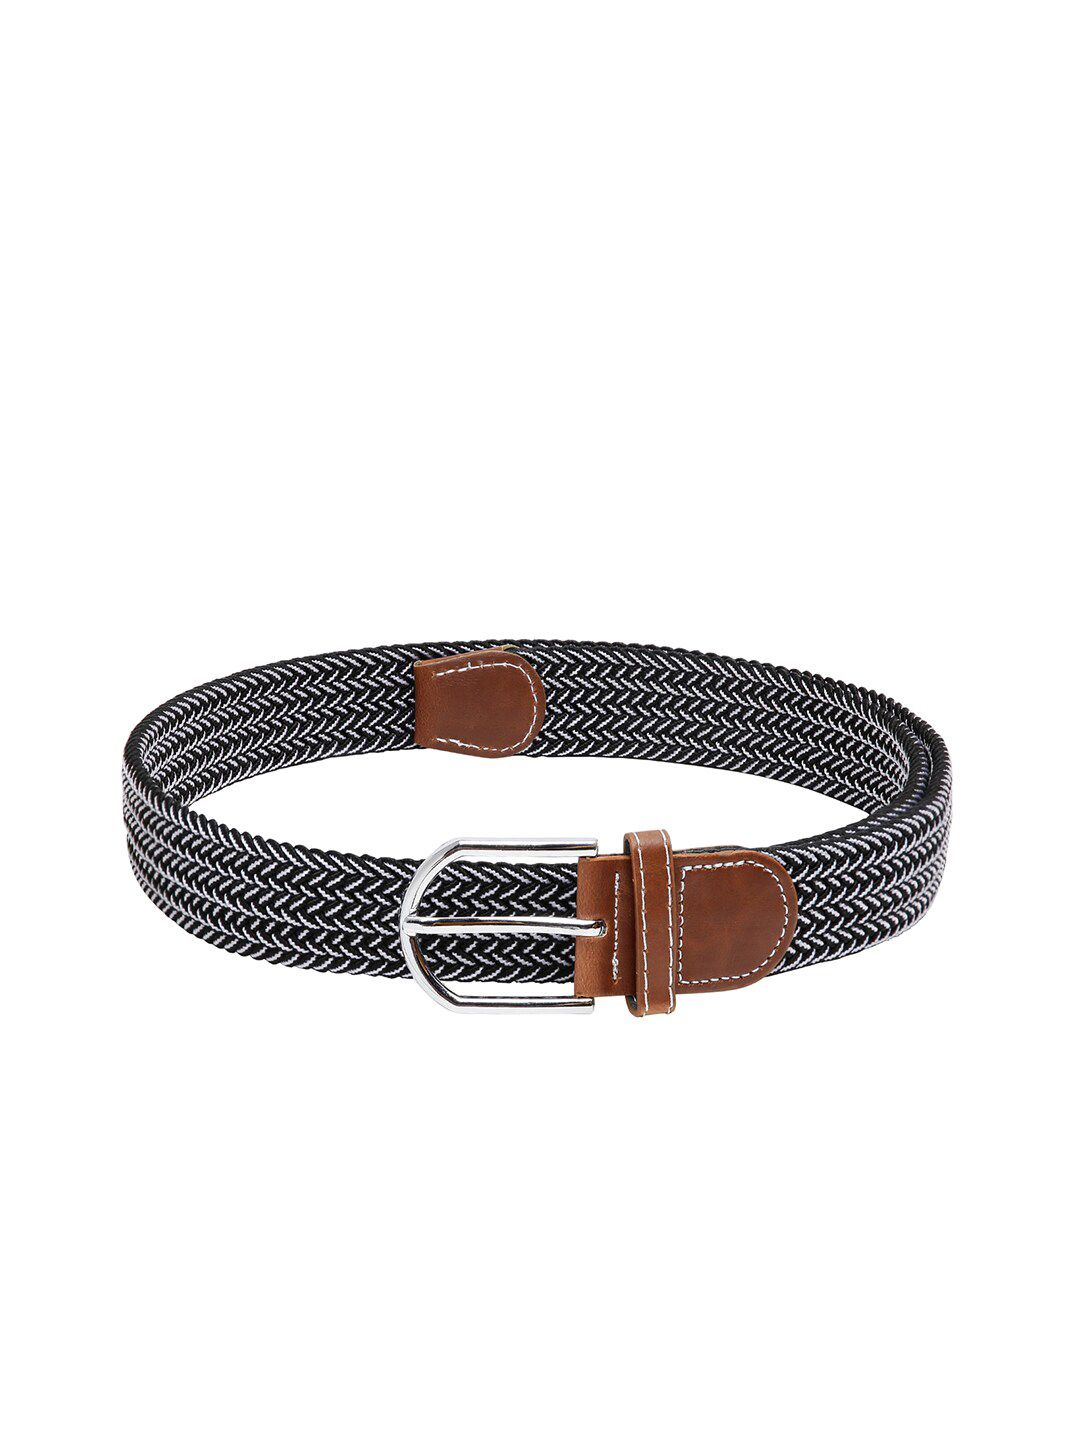 CRUSSET Unisex Black & White Braided Belt Price in India